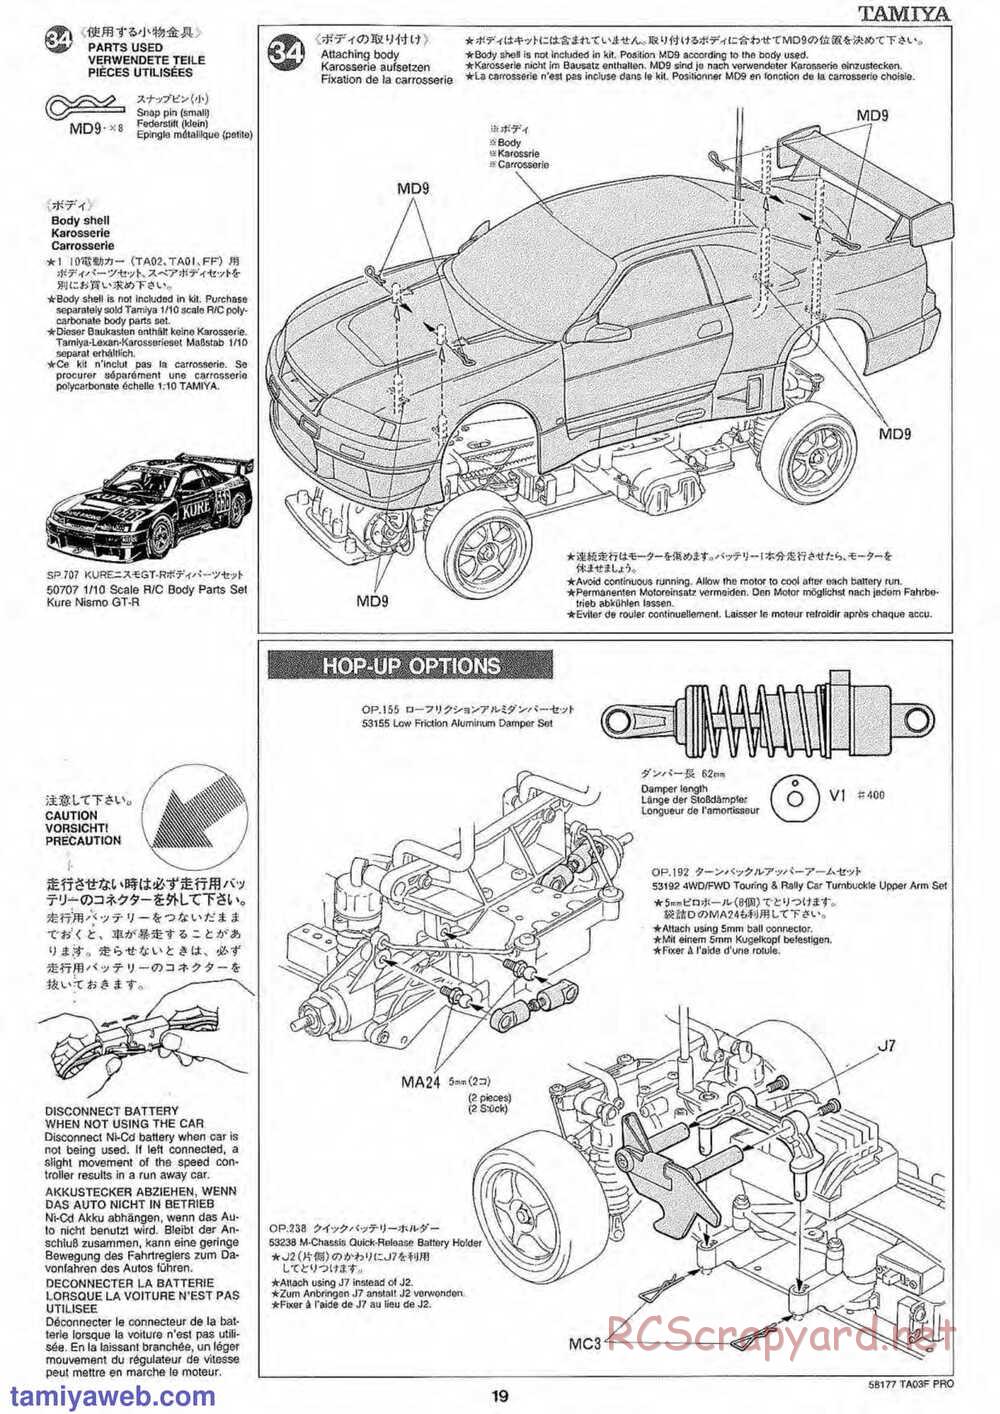 Tamiya - TA-03F Pro Chassis - Manual - Page 19